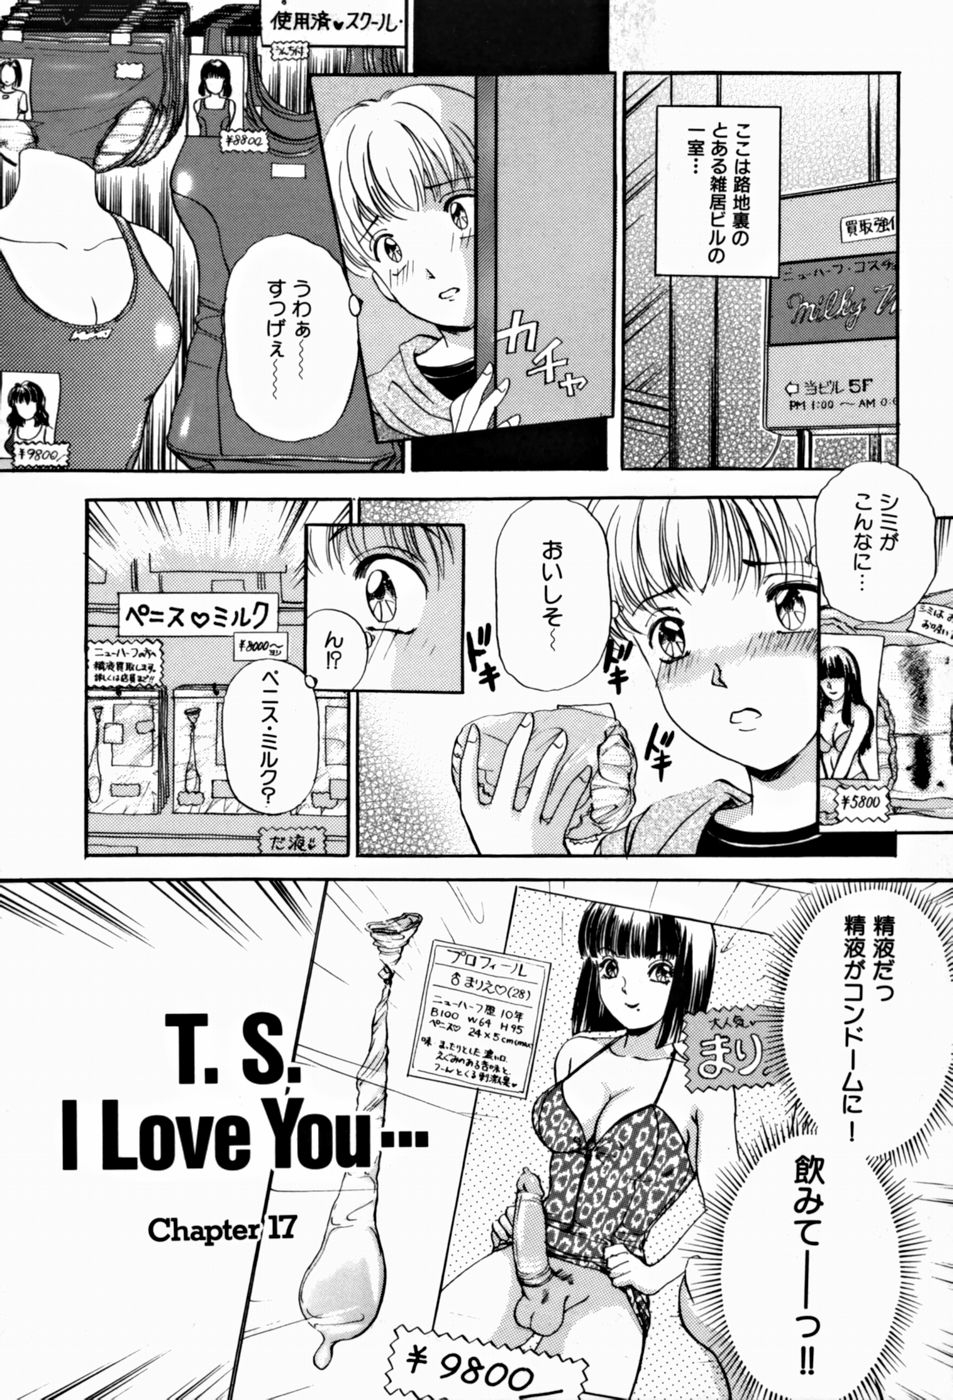 [The Amanoja9] T.S. I LOVE YOU... 2 - Lucky Girls Tsuiteru Onna 4